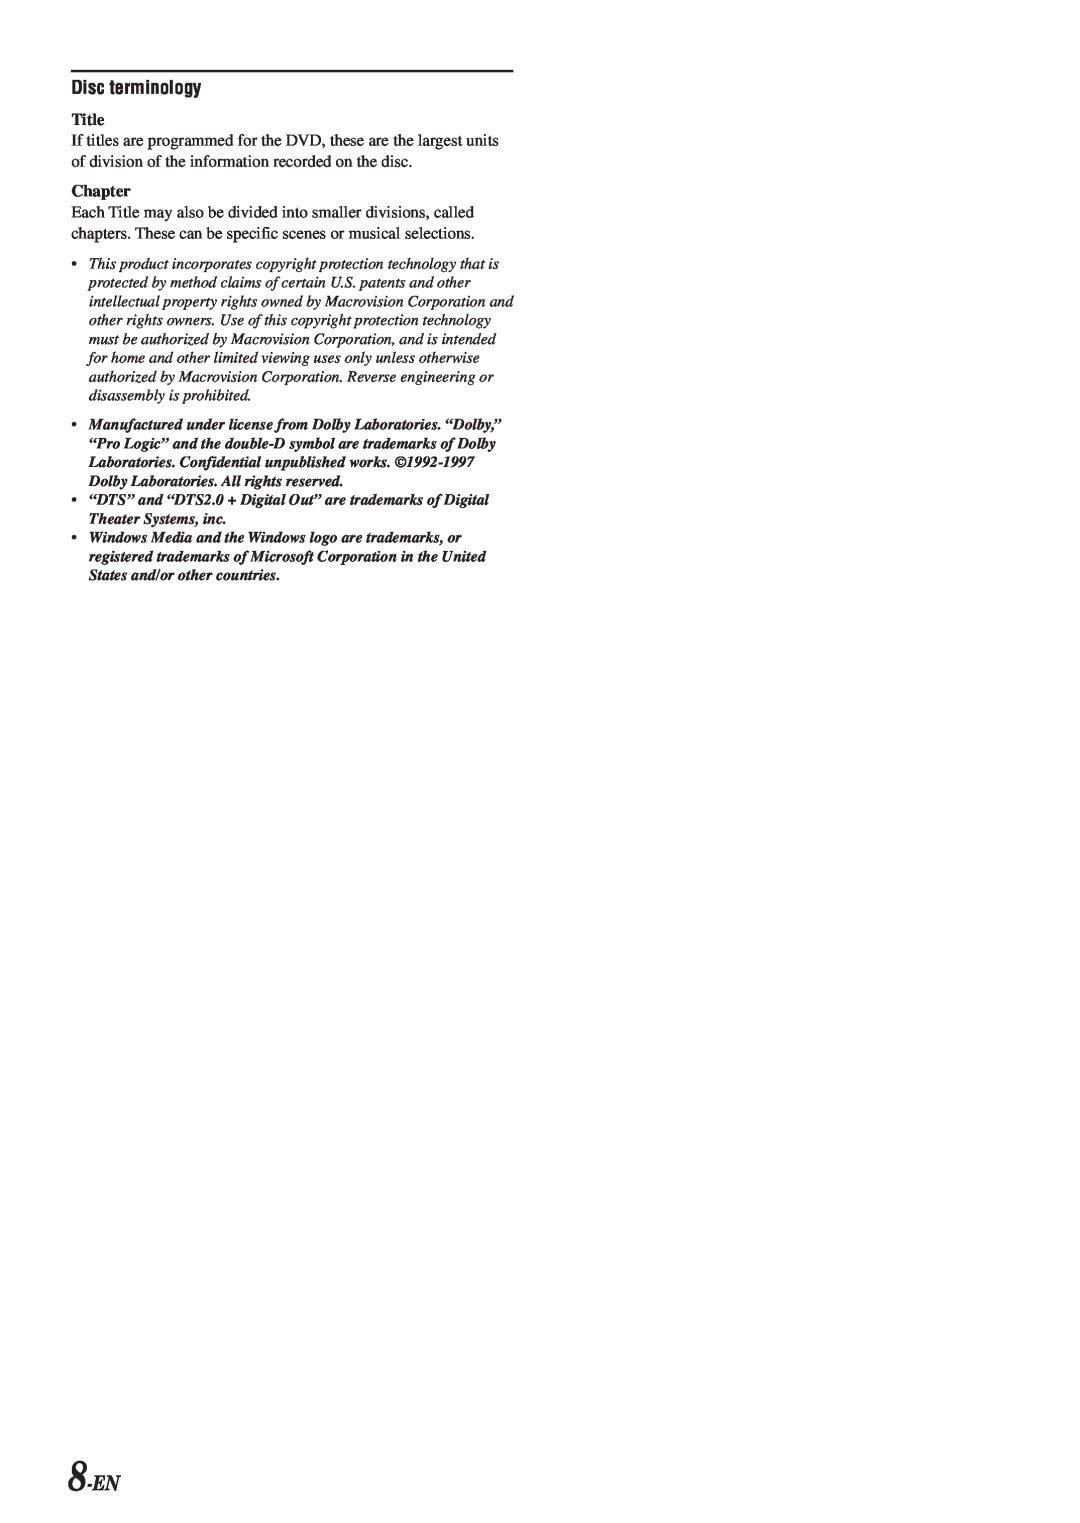 Alpine IVA-D300 owner manual 8-EN, Disc terminology, Title, Chapter 